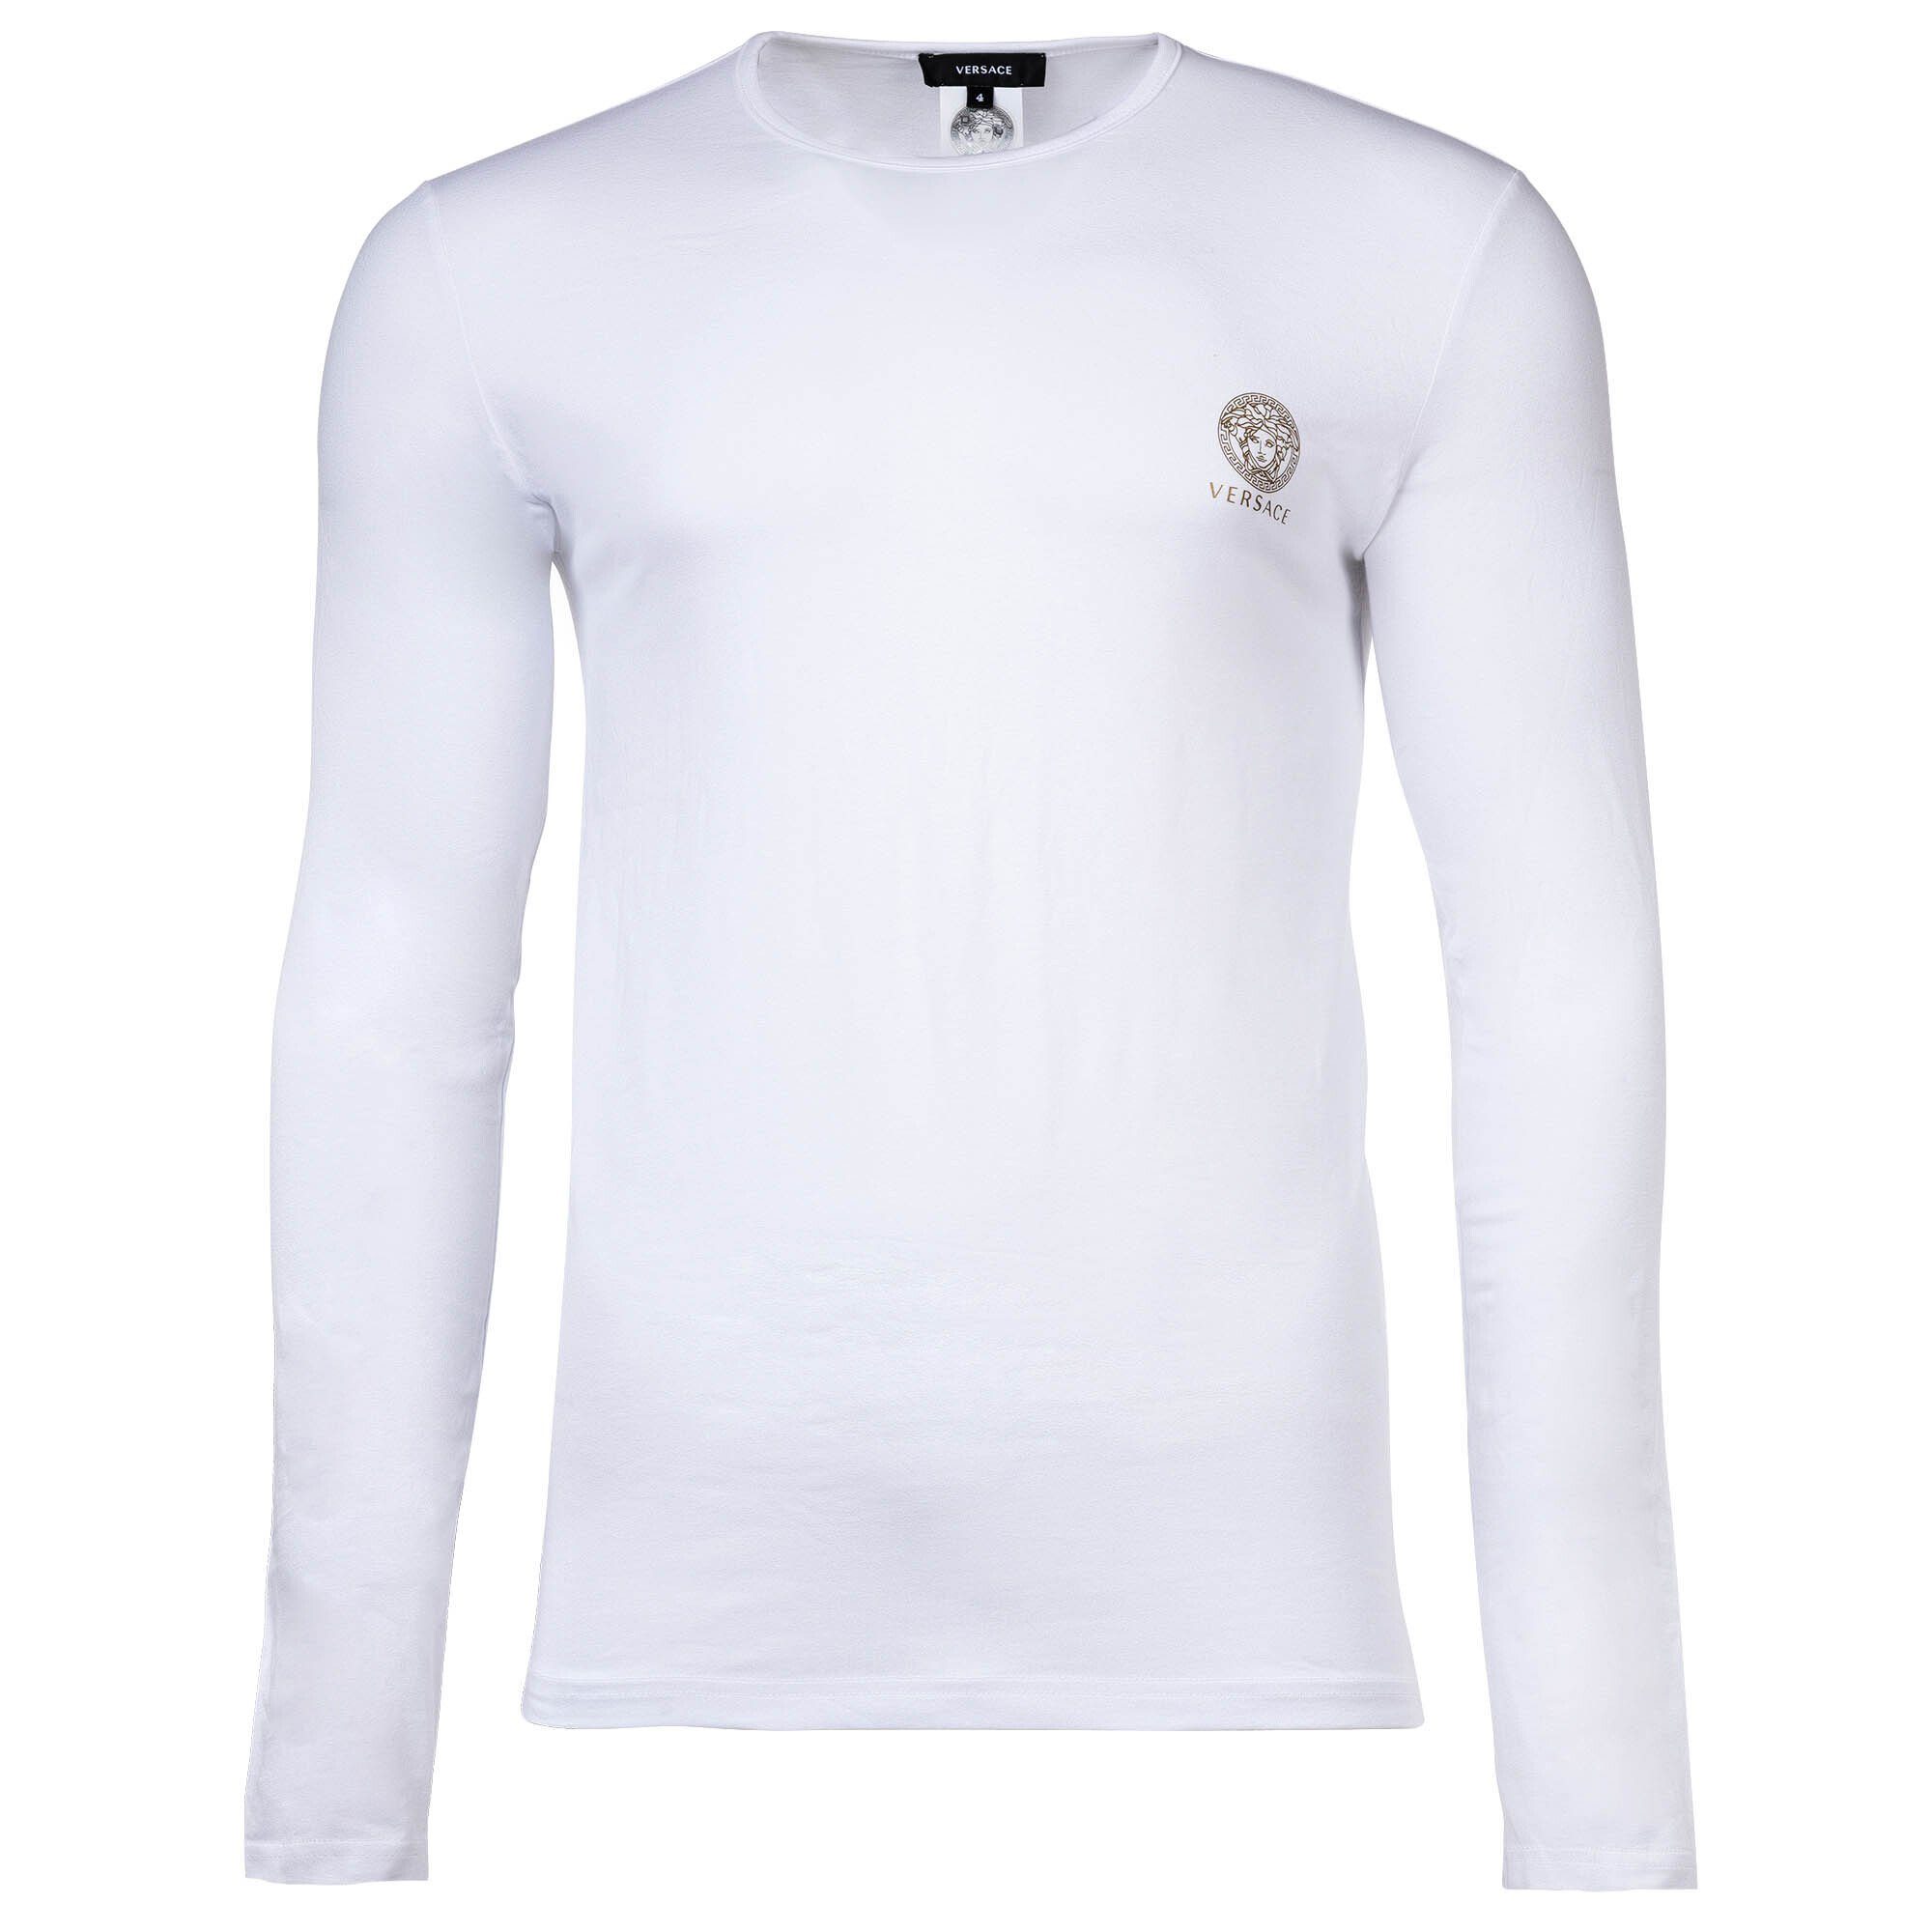 Herren langarm, - T-Shirt Rundhals Shirt Sweatshirt, Versace Weiß